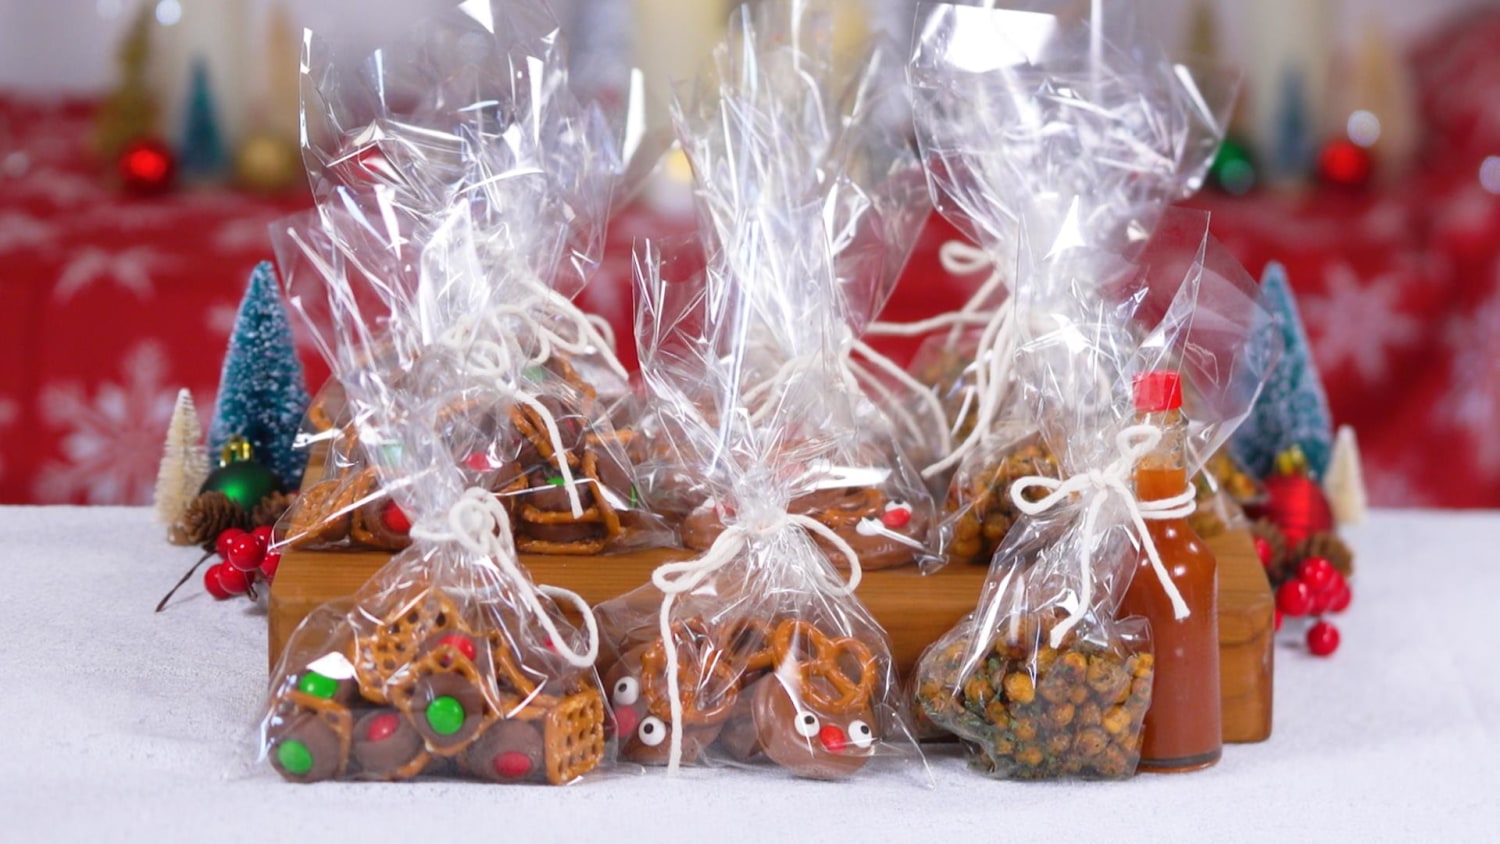 PHOTOS: New Edible Gifts and Christmas Goodies Make Perfect